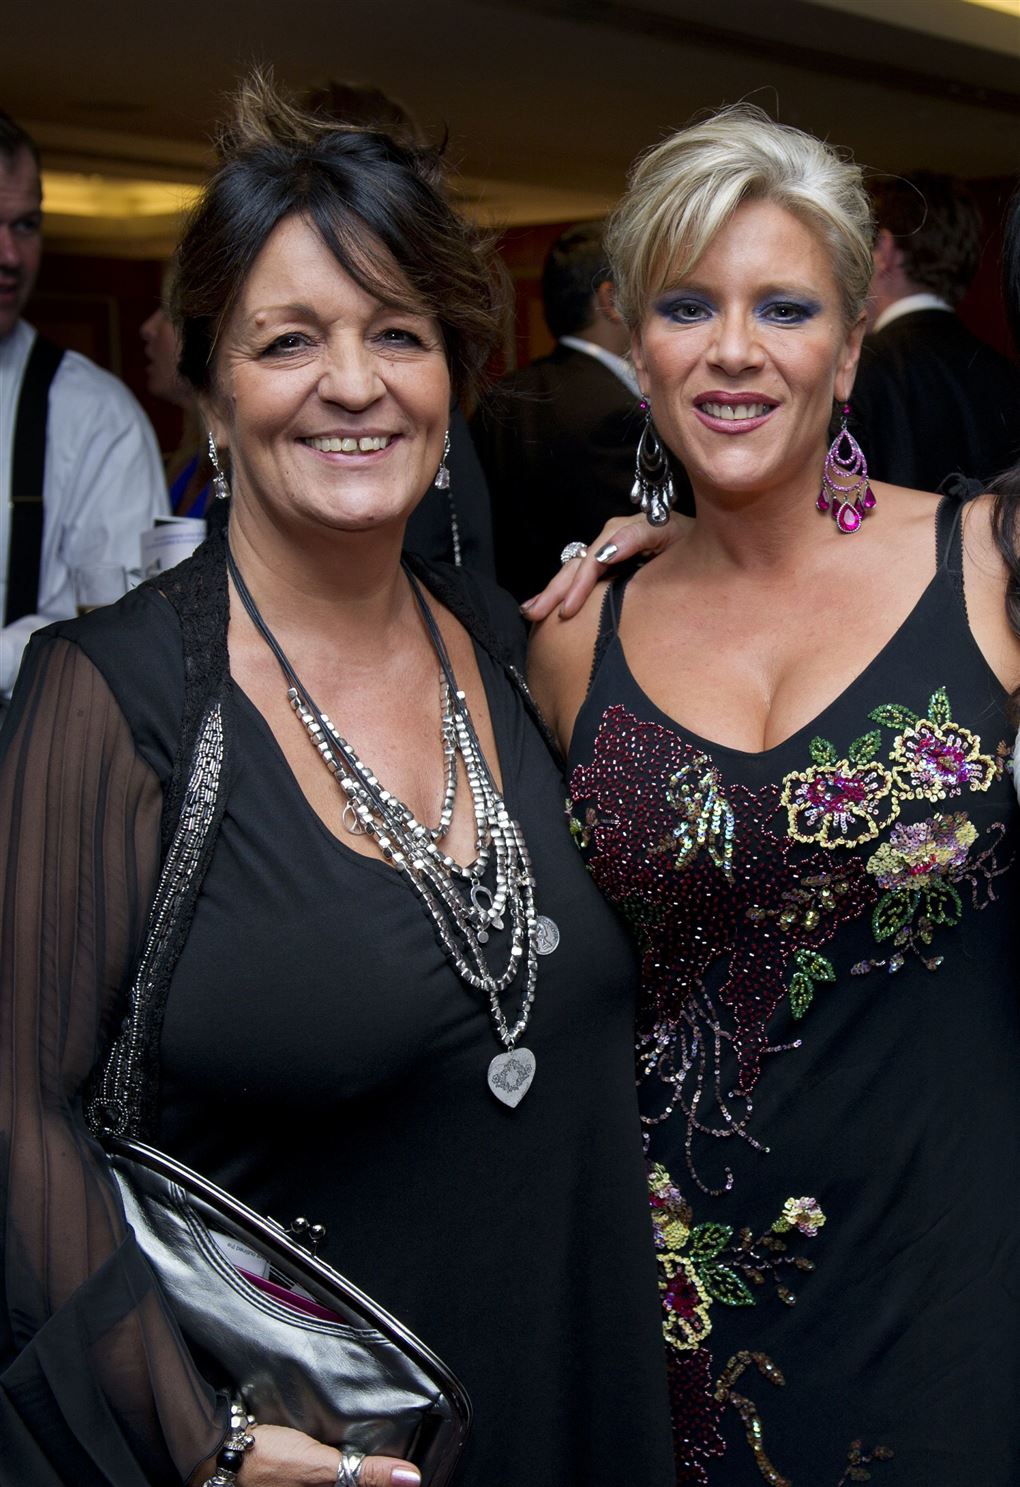 To kvinder i sorte kjoler smiler